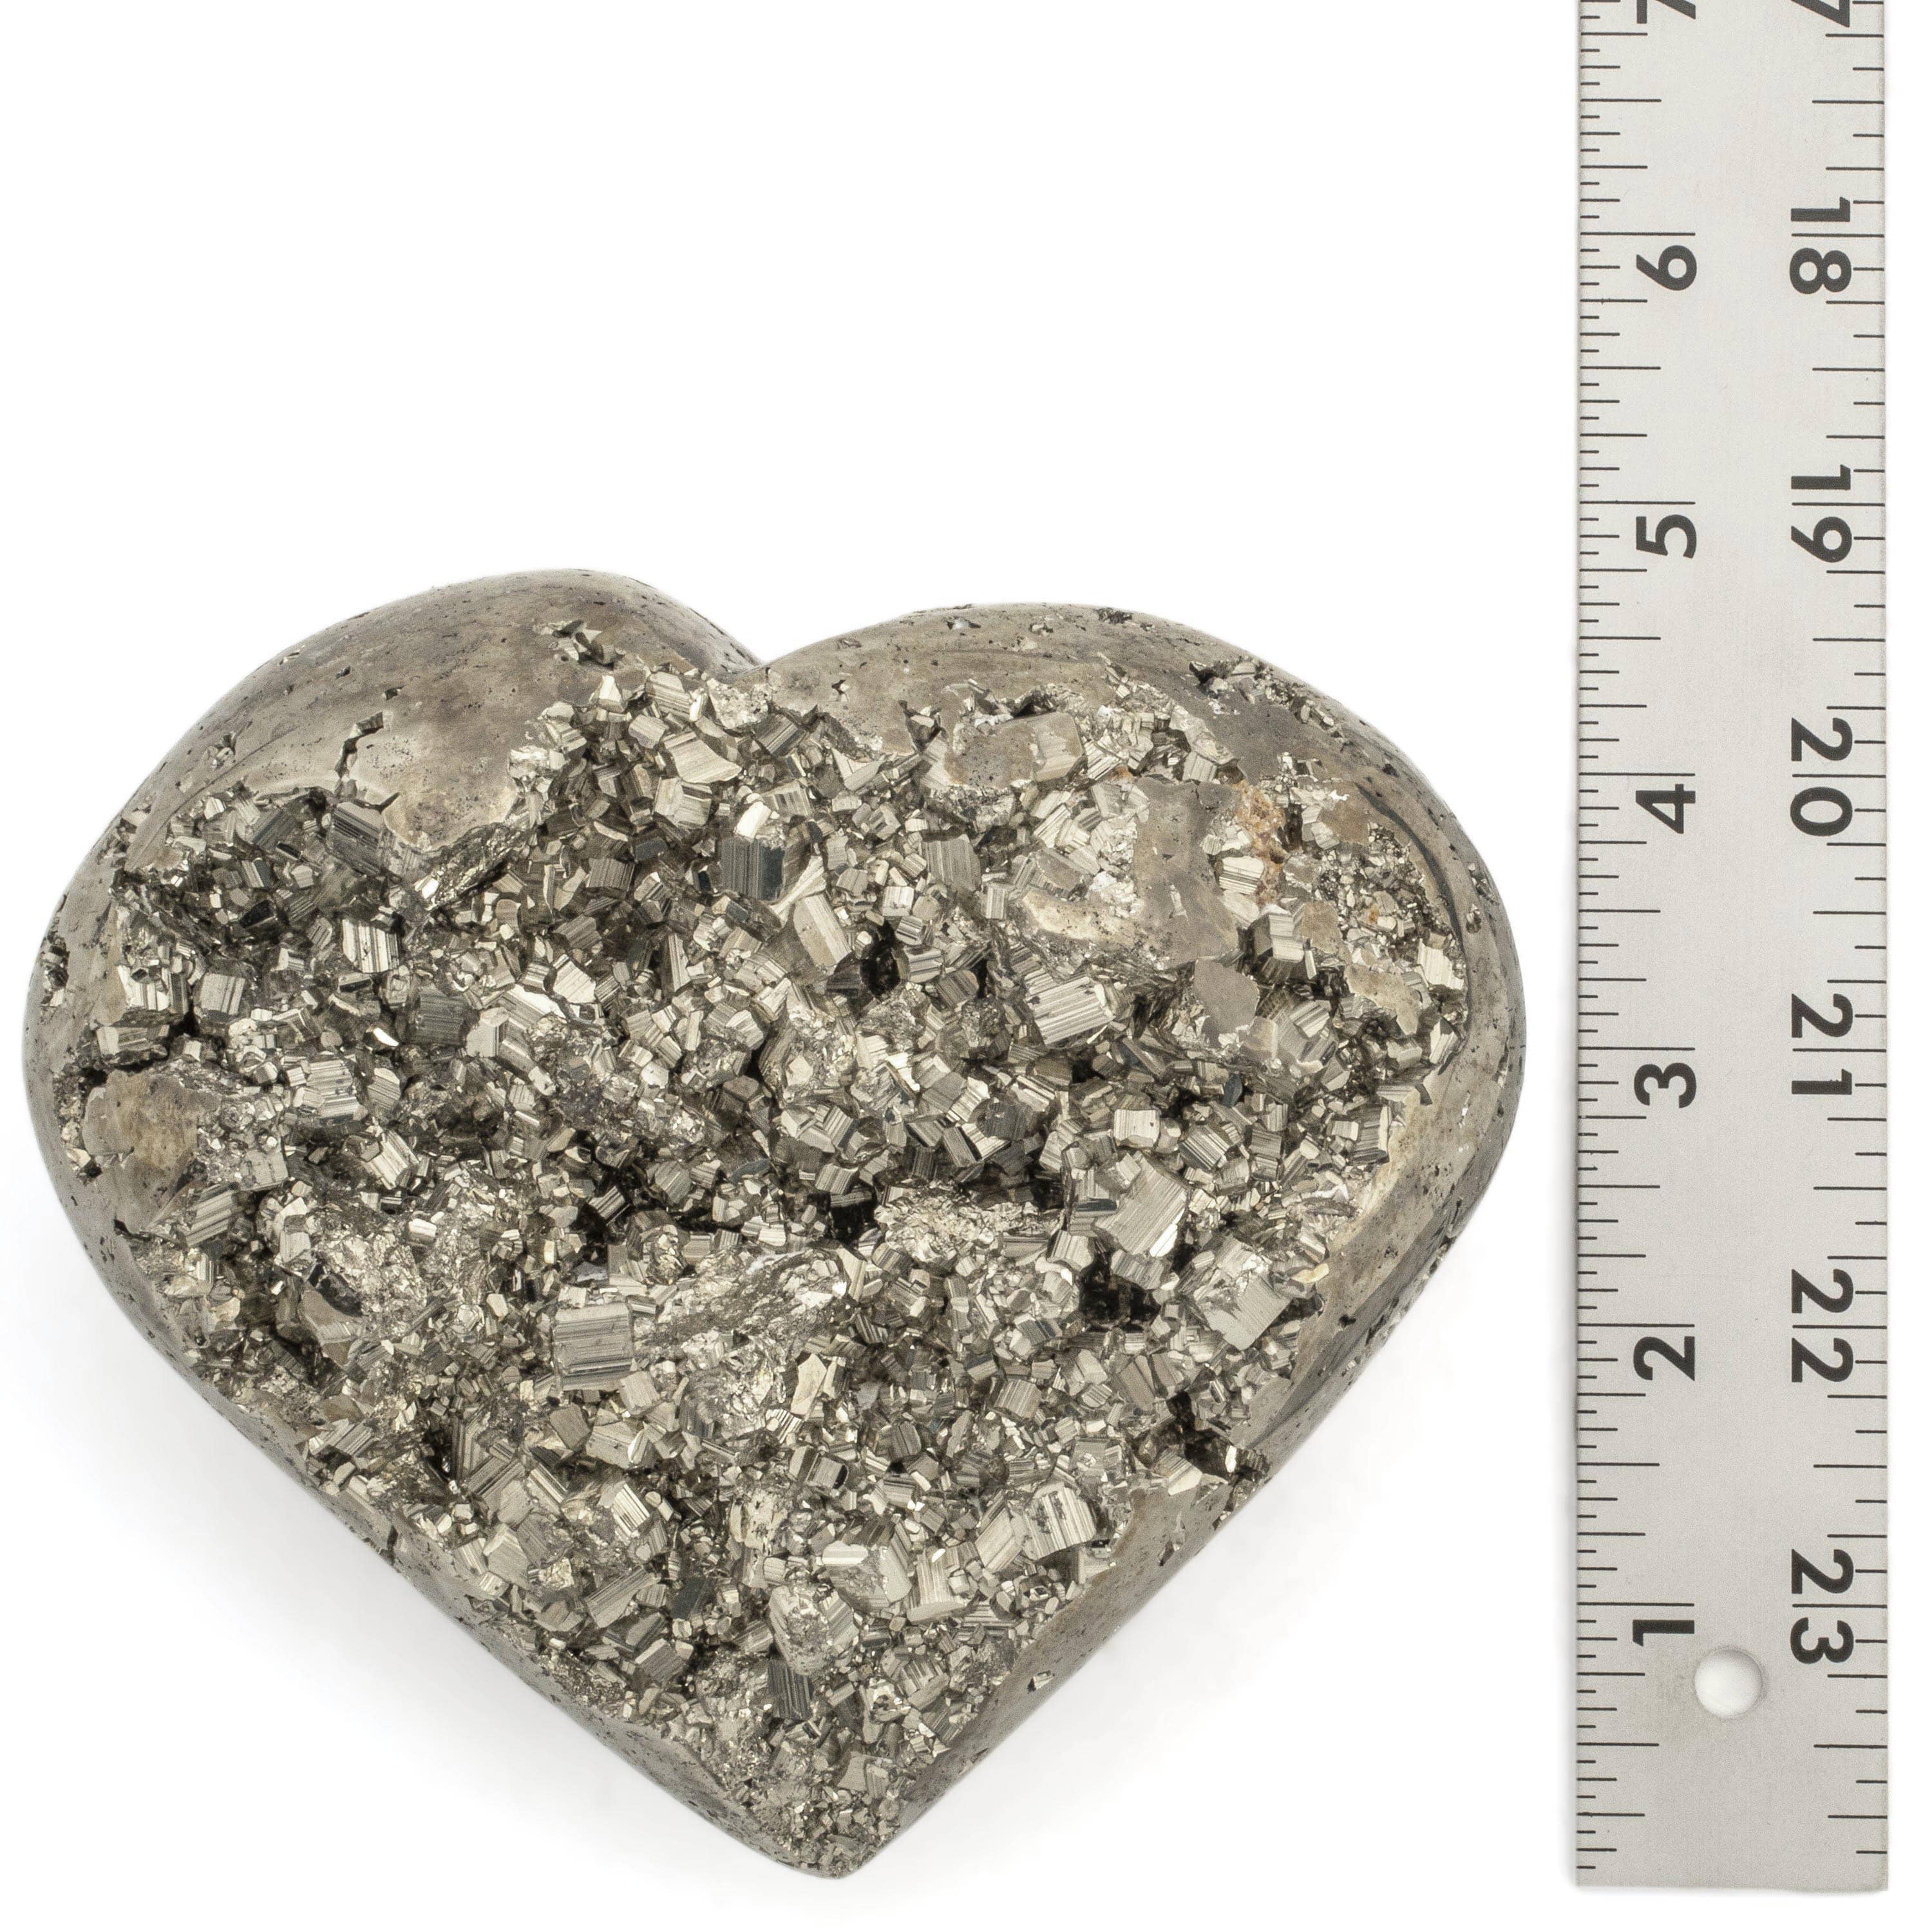 Kalifano Pyrite Pyrite Heart Carving 5" / 1,510 grams GH1800-PC.001